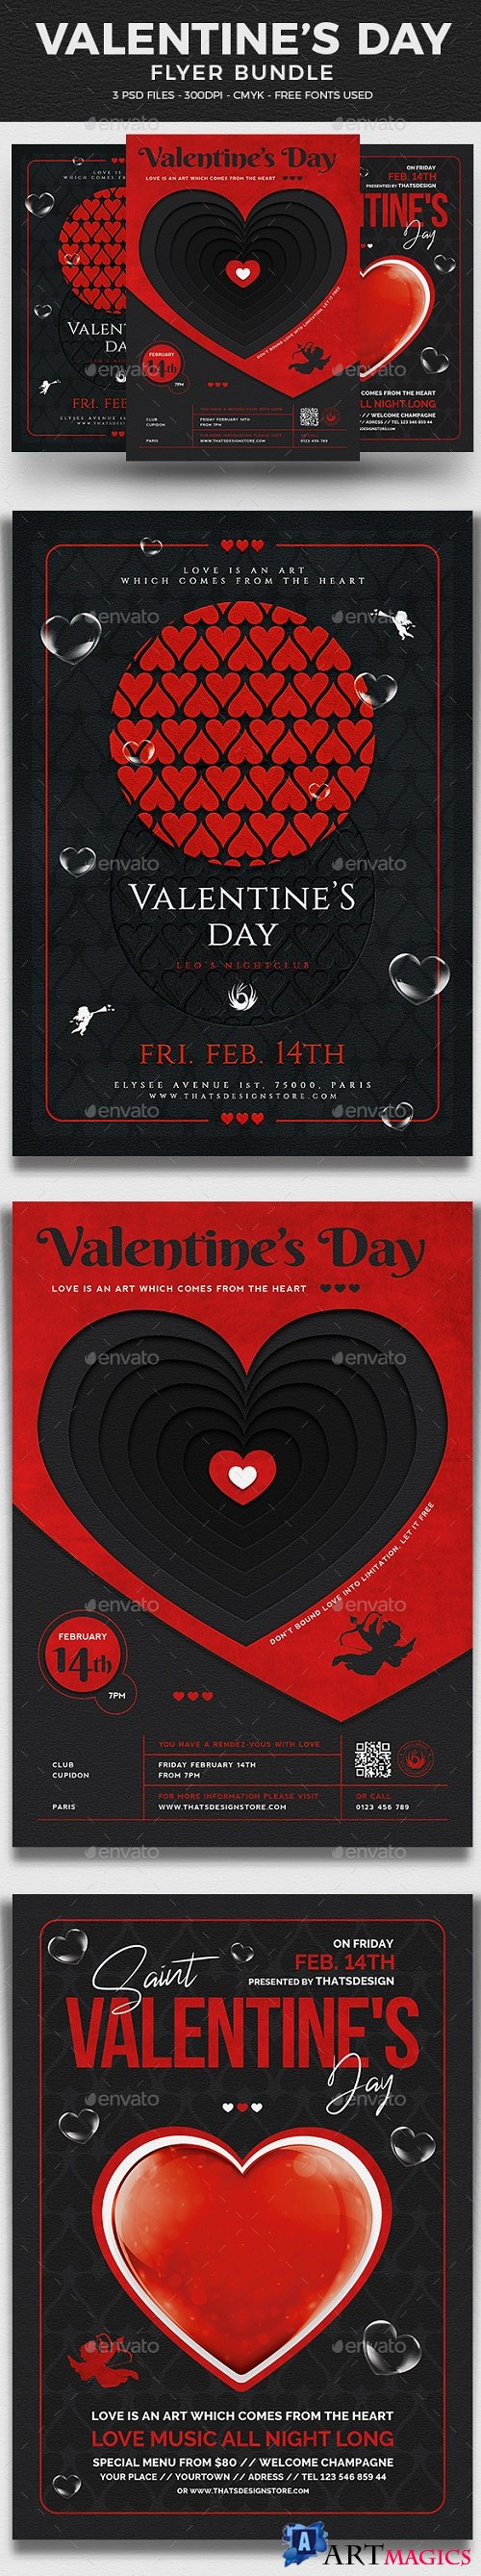 Valentines Day Flyer Bundle V4 - 25434277 - 4449571